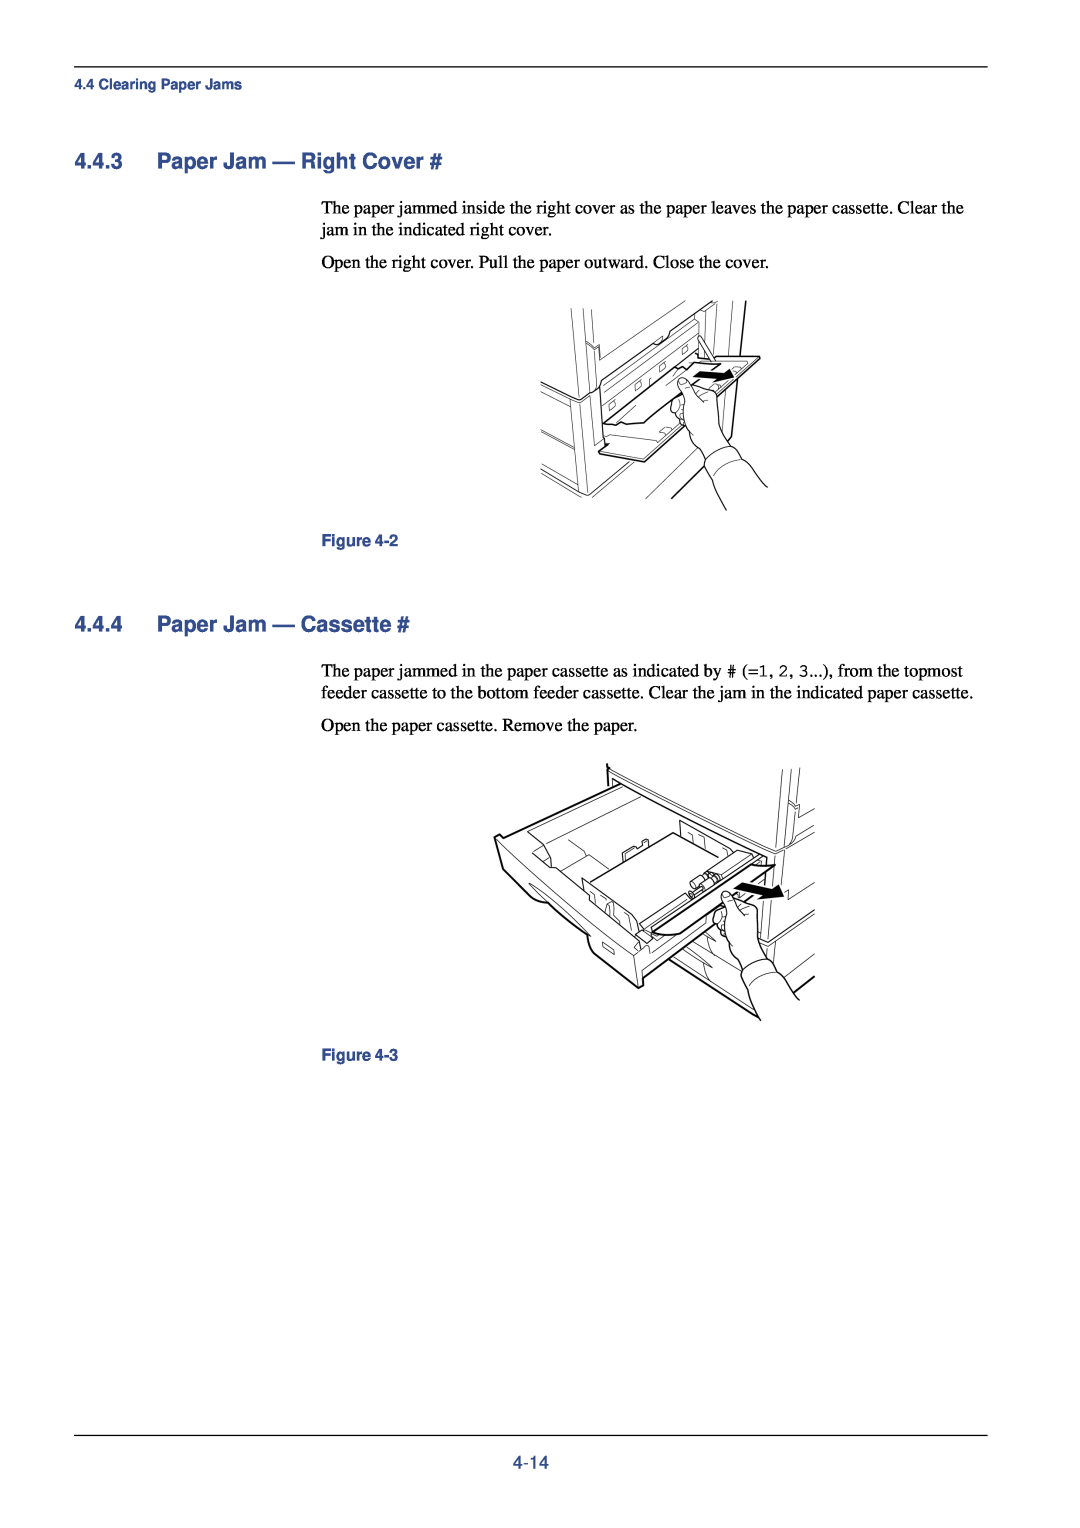 Xerox FS-C8008DN, FS-C8008N manual Paper Jam - Right Cover #, Paper Jam - Cassette #, 4-14 